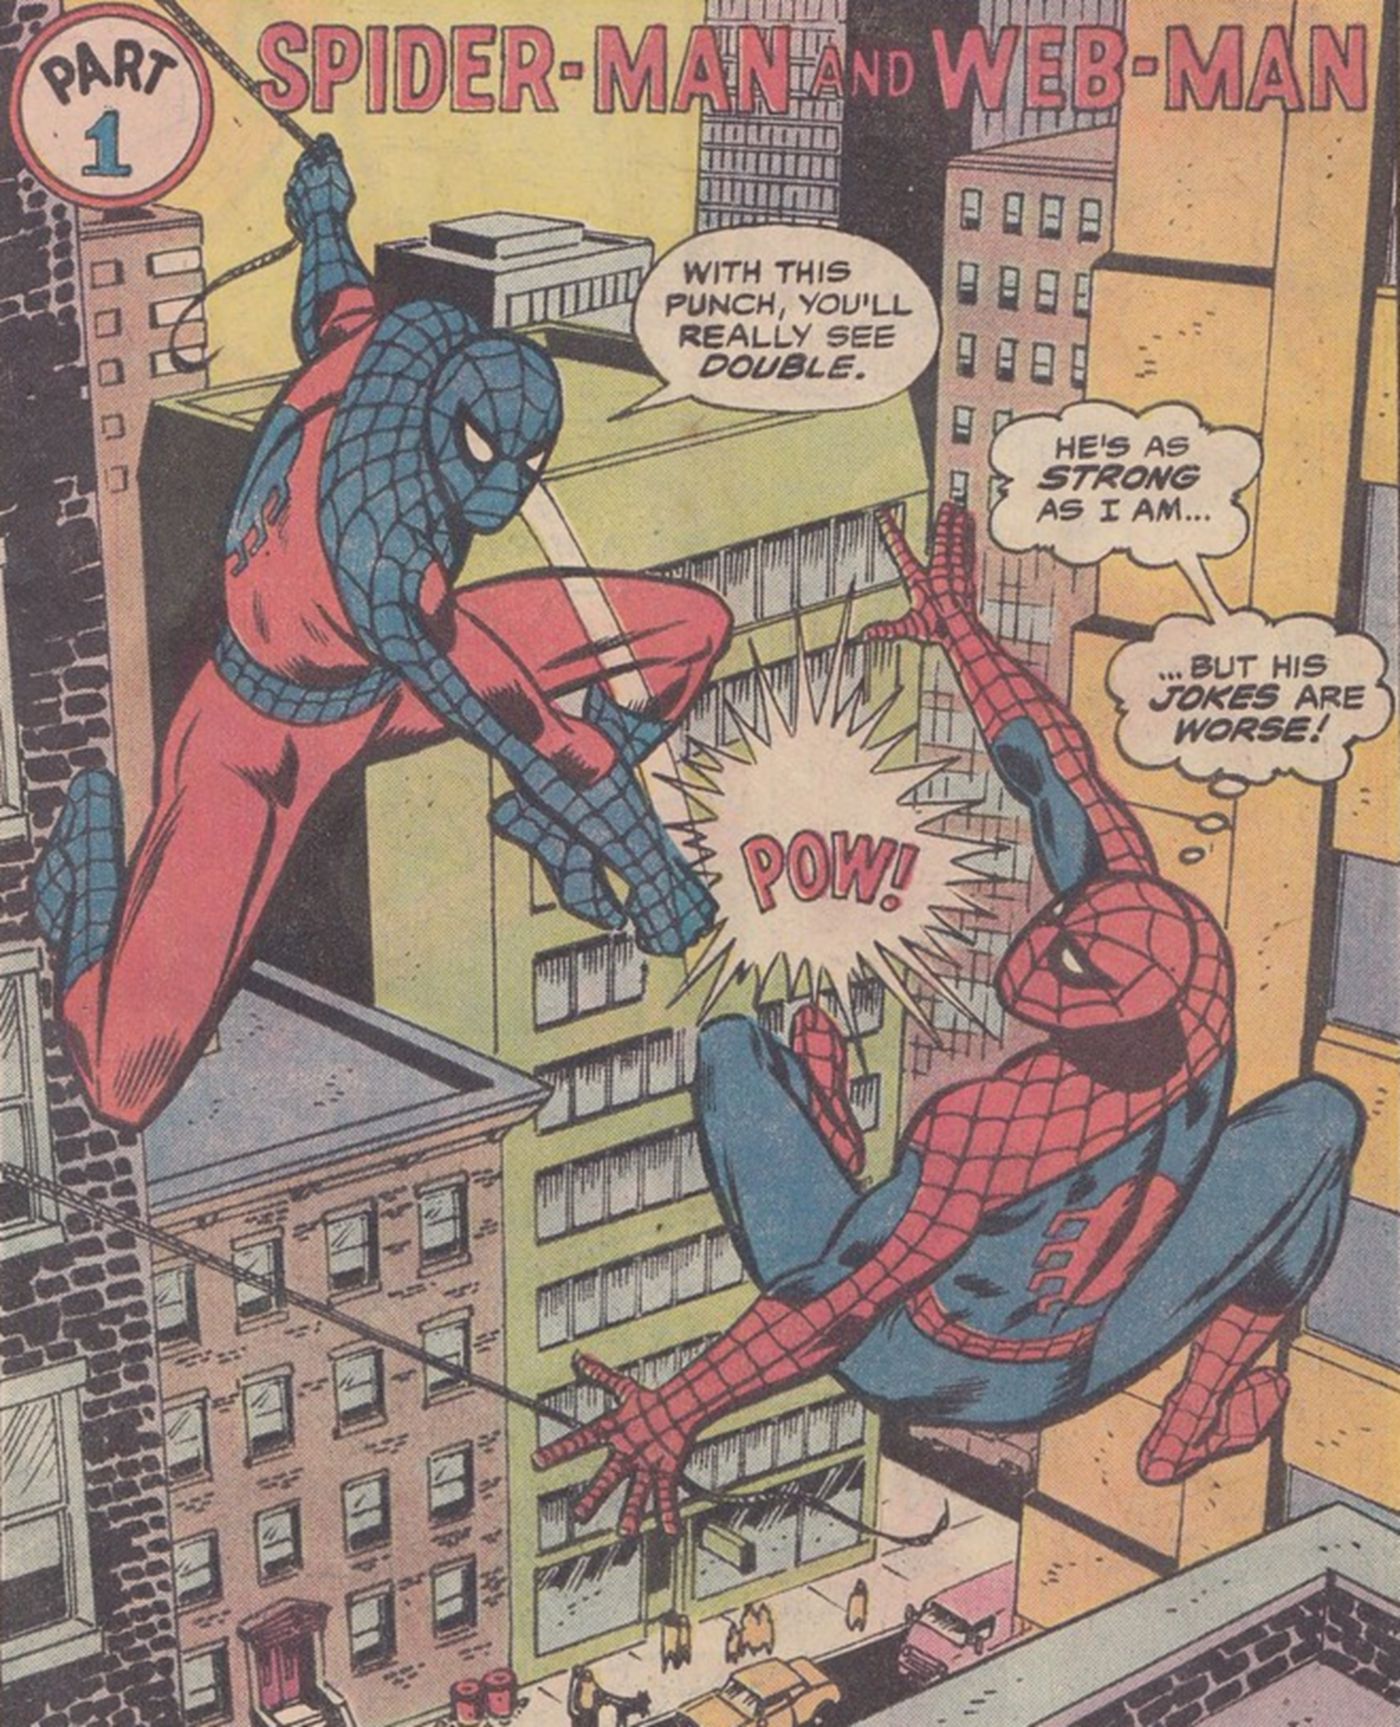 Spider-Man and Web-Man Marvel Comics